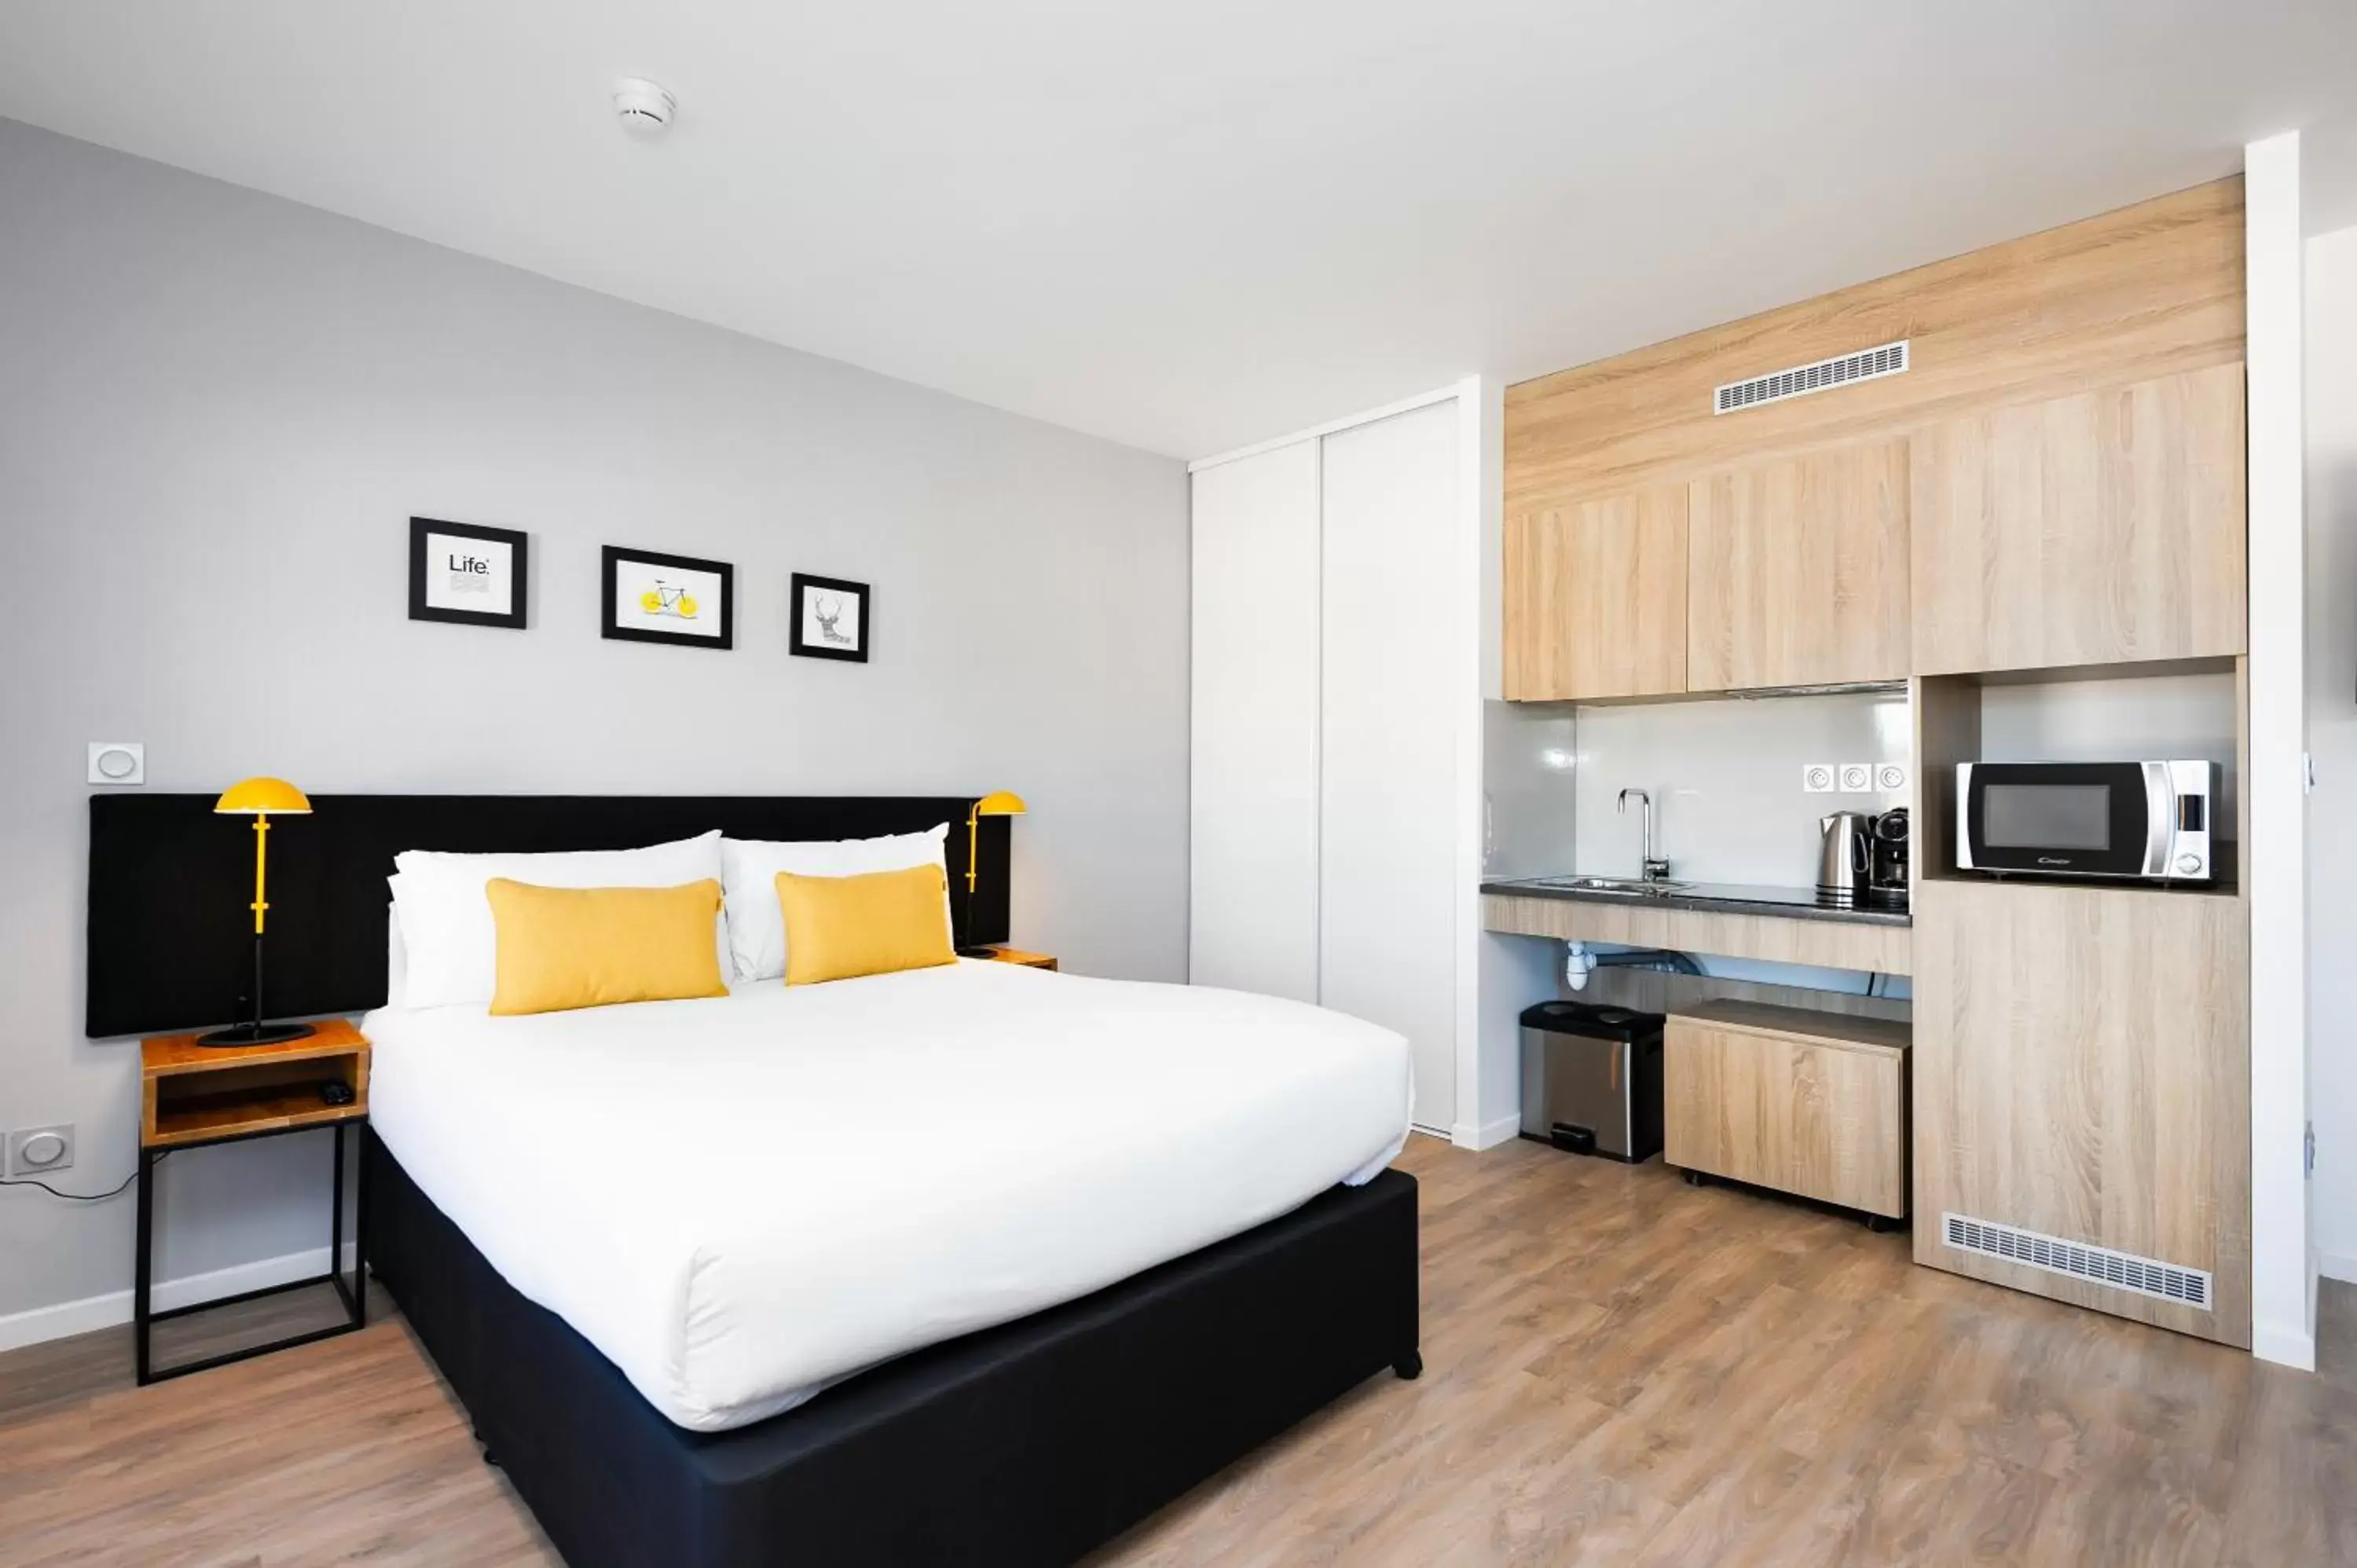 Bed in Staycity Aparthotels near Disneyland Paris